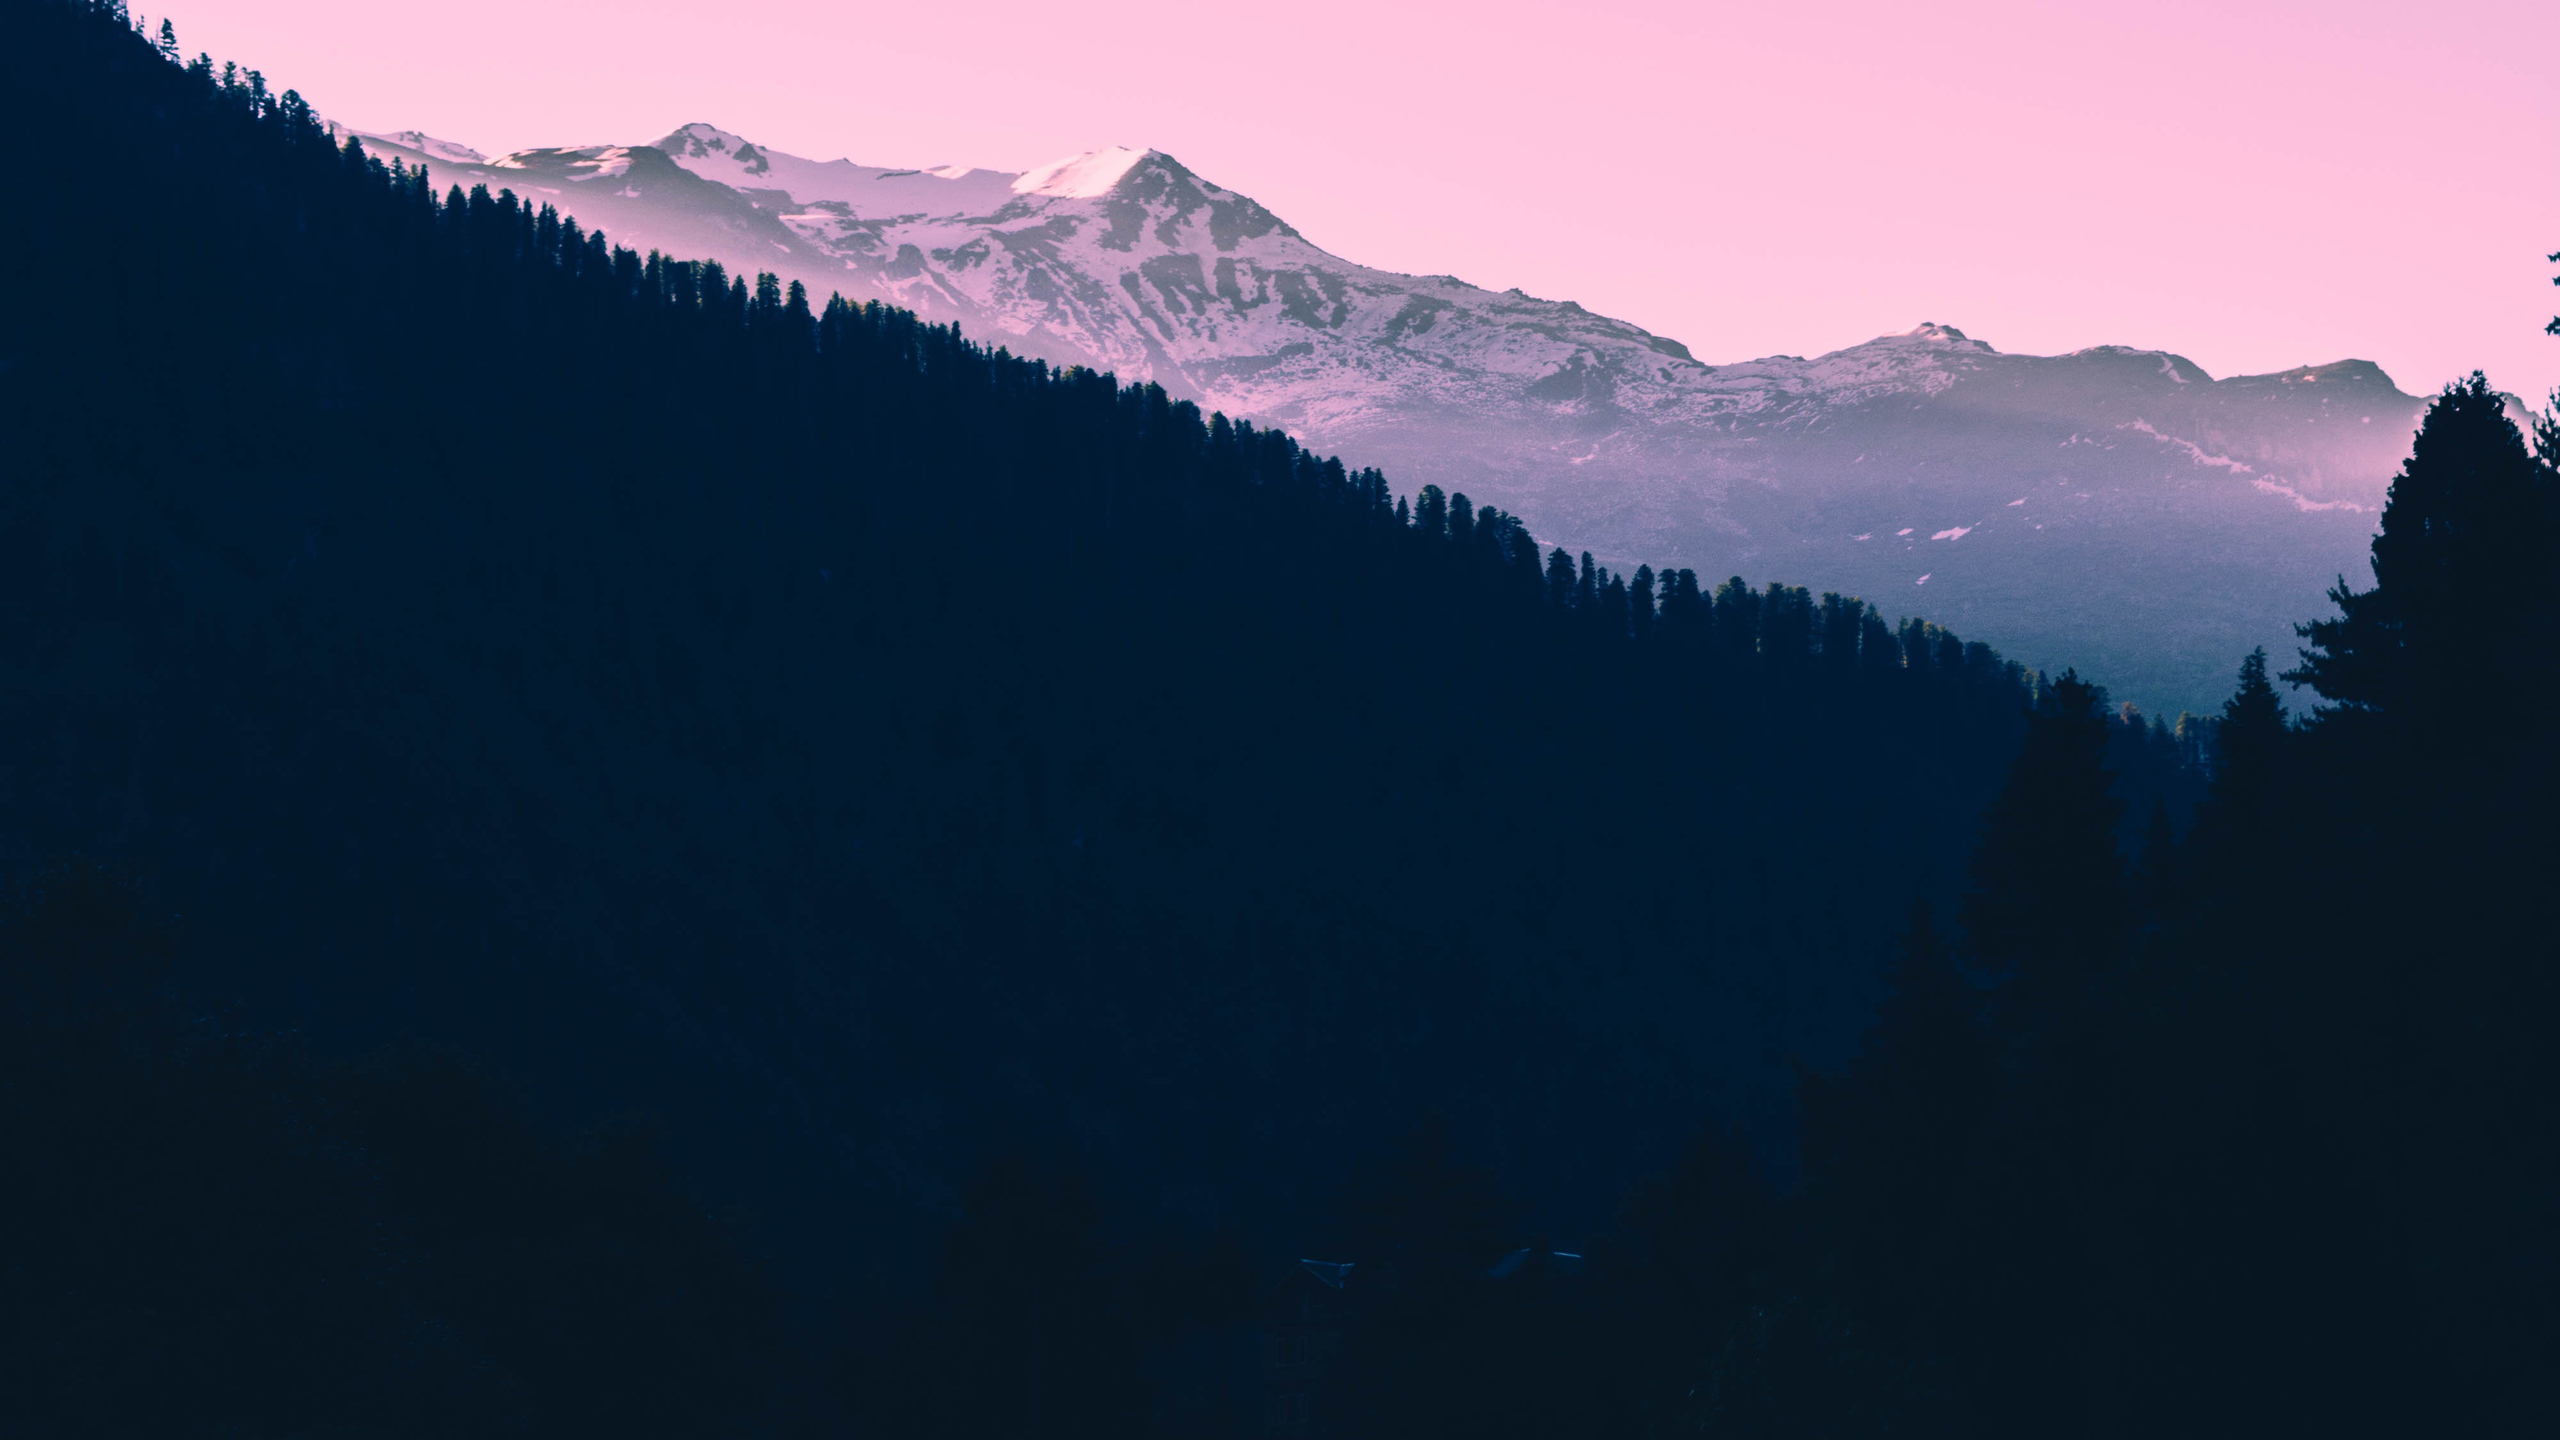 2560x1440 Beautiful Mountains Landscape Pink Tone 1440p Resolution Hd